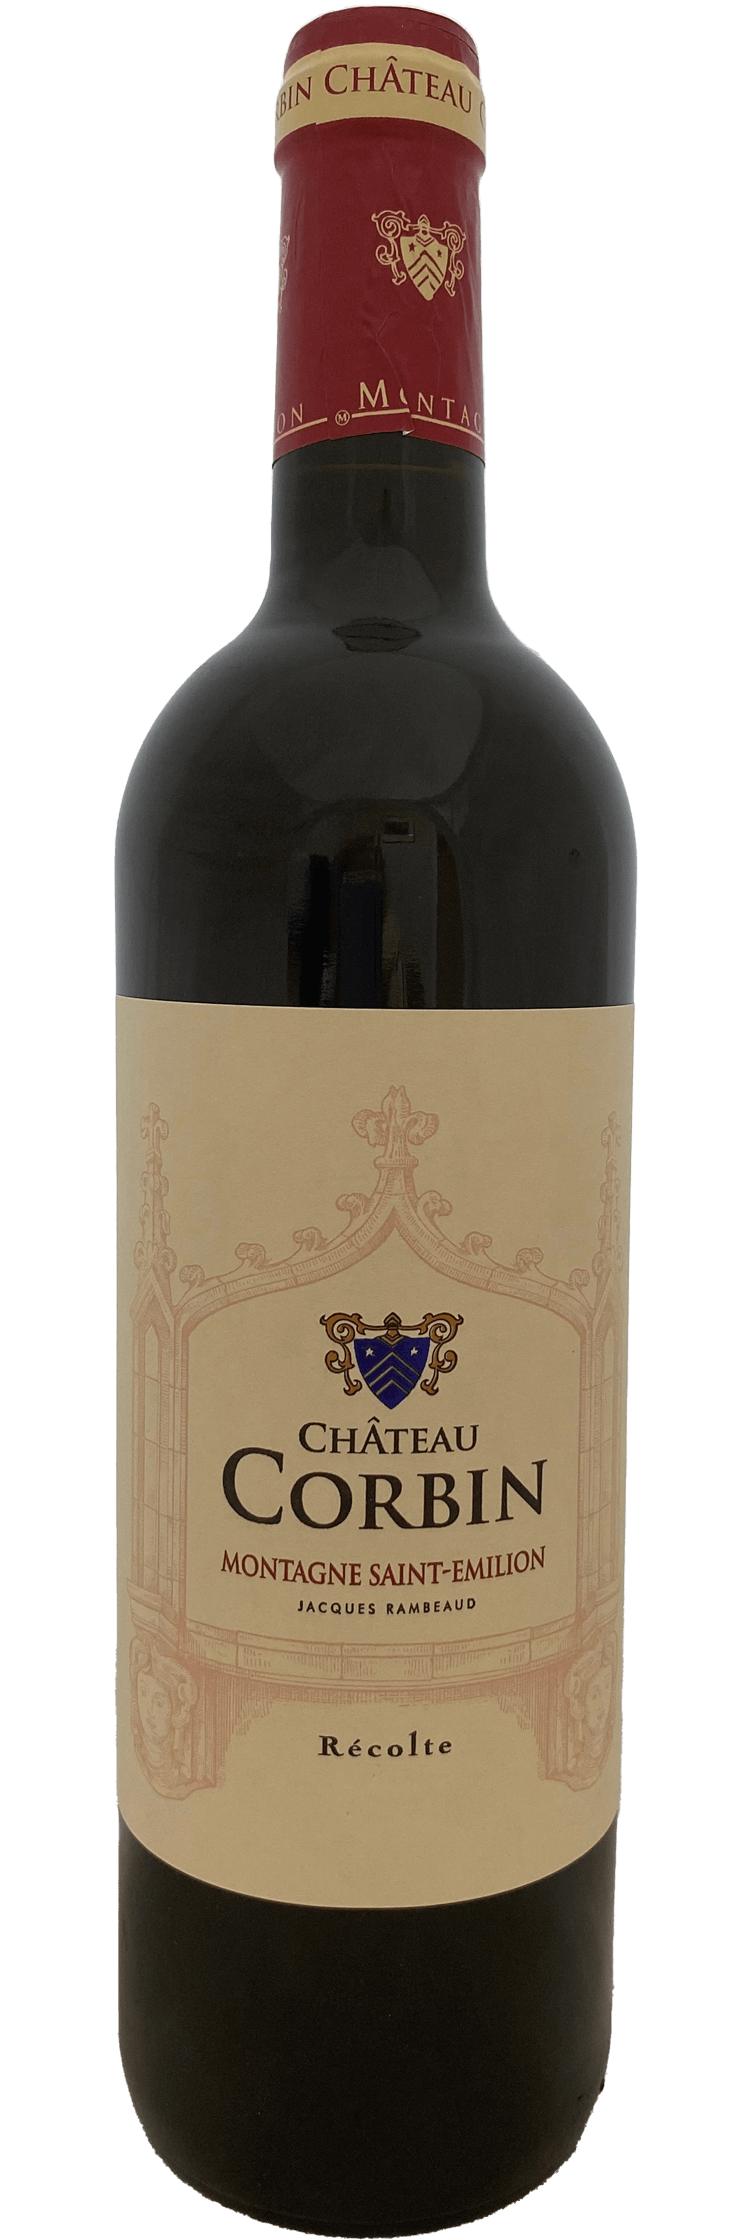 Château Corbin 2016 Grand Cru de Saint-Emilion